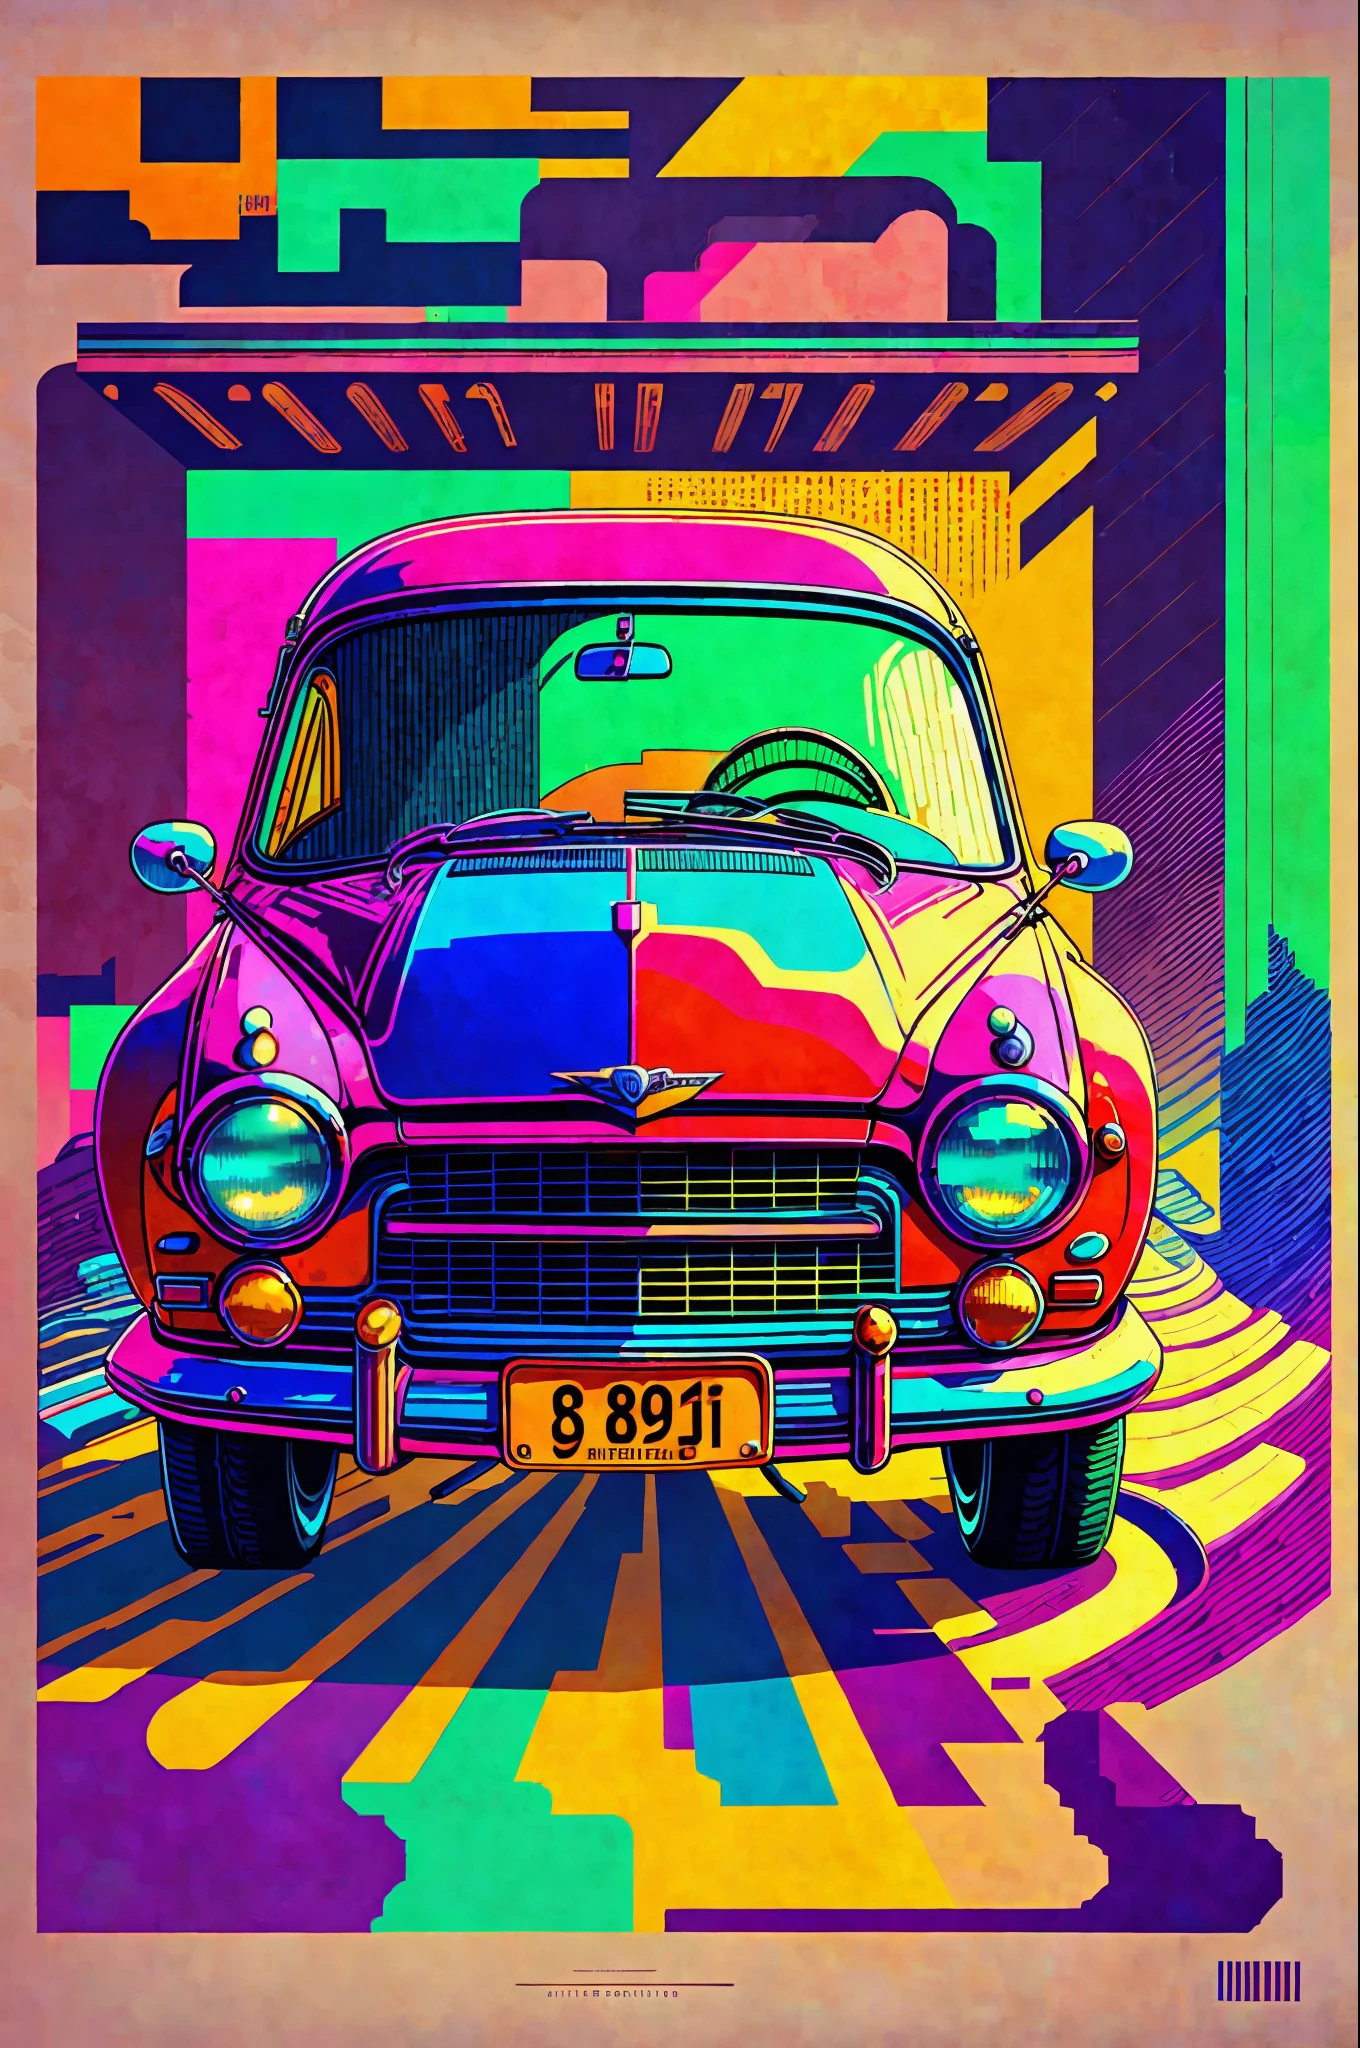 {Obra de arte}: Carro dos anos 90 do Pixel. Estilo retrô with vibrant colors. nostalgia in prints. (largura: 800, Altura: 600, método: Euler, passos: 20, Escala CFG: 10, Semente: 12345, de luxo: 2)
Tag: Obra de arte, Car, Pixel, 90's, Estilo retrô, cores vibrantes, nostalgia. --auto --s2